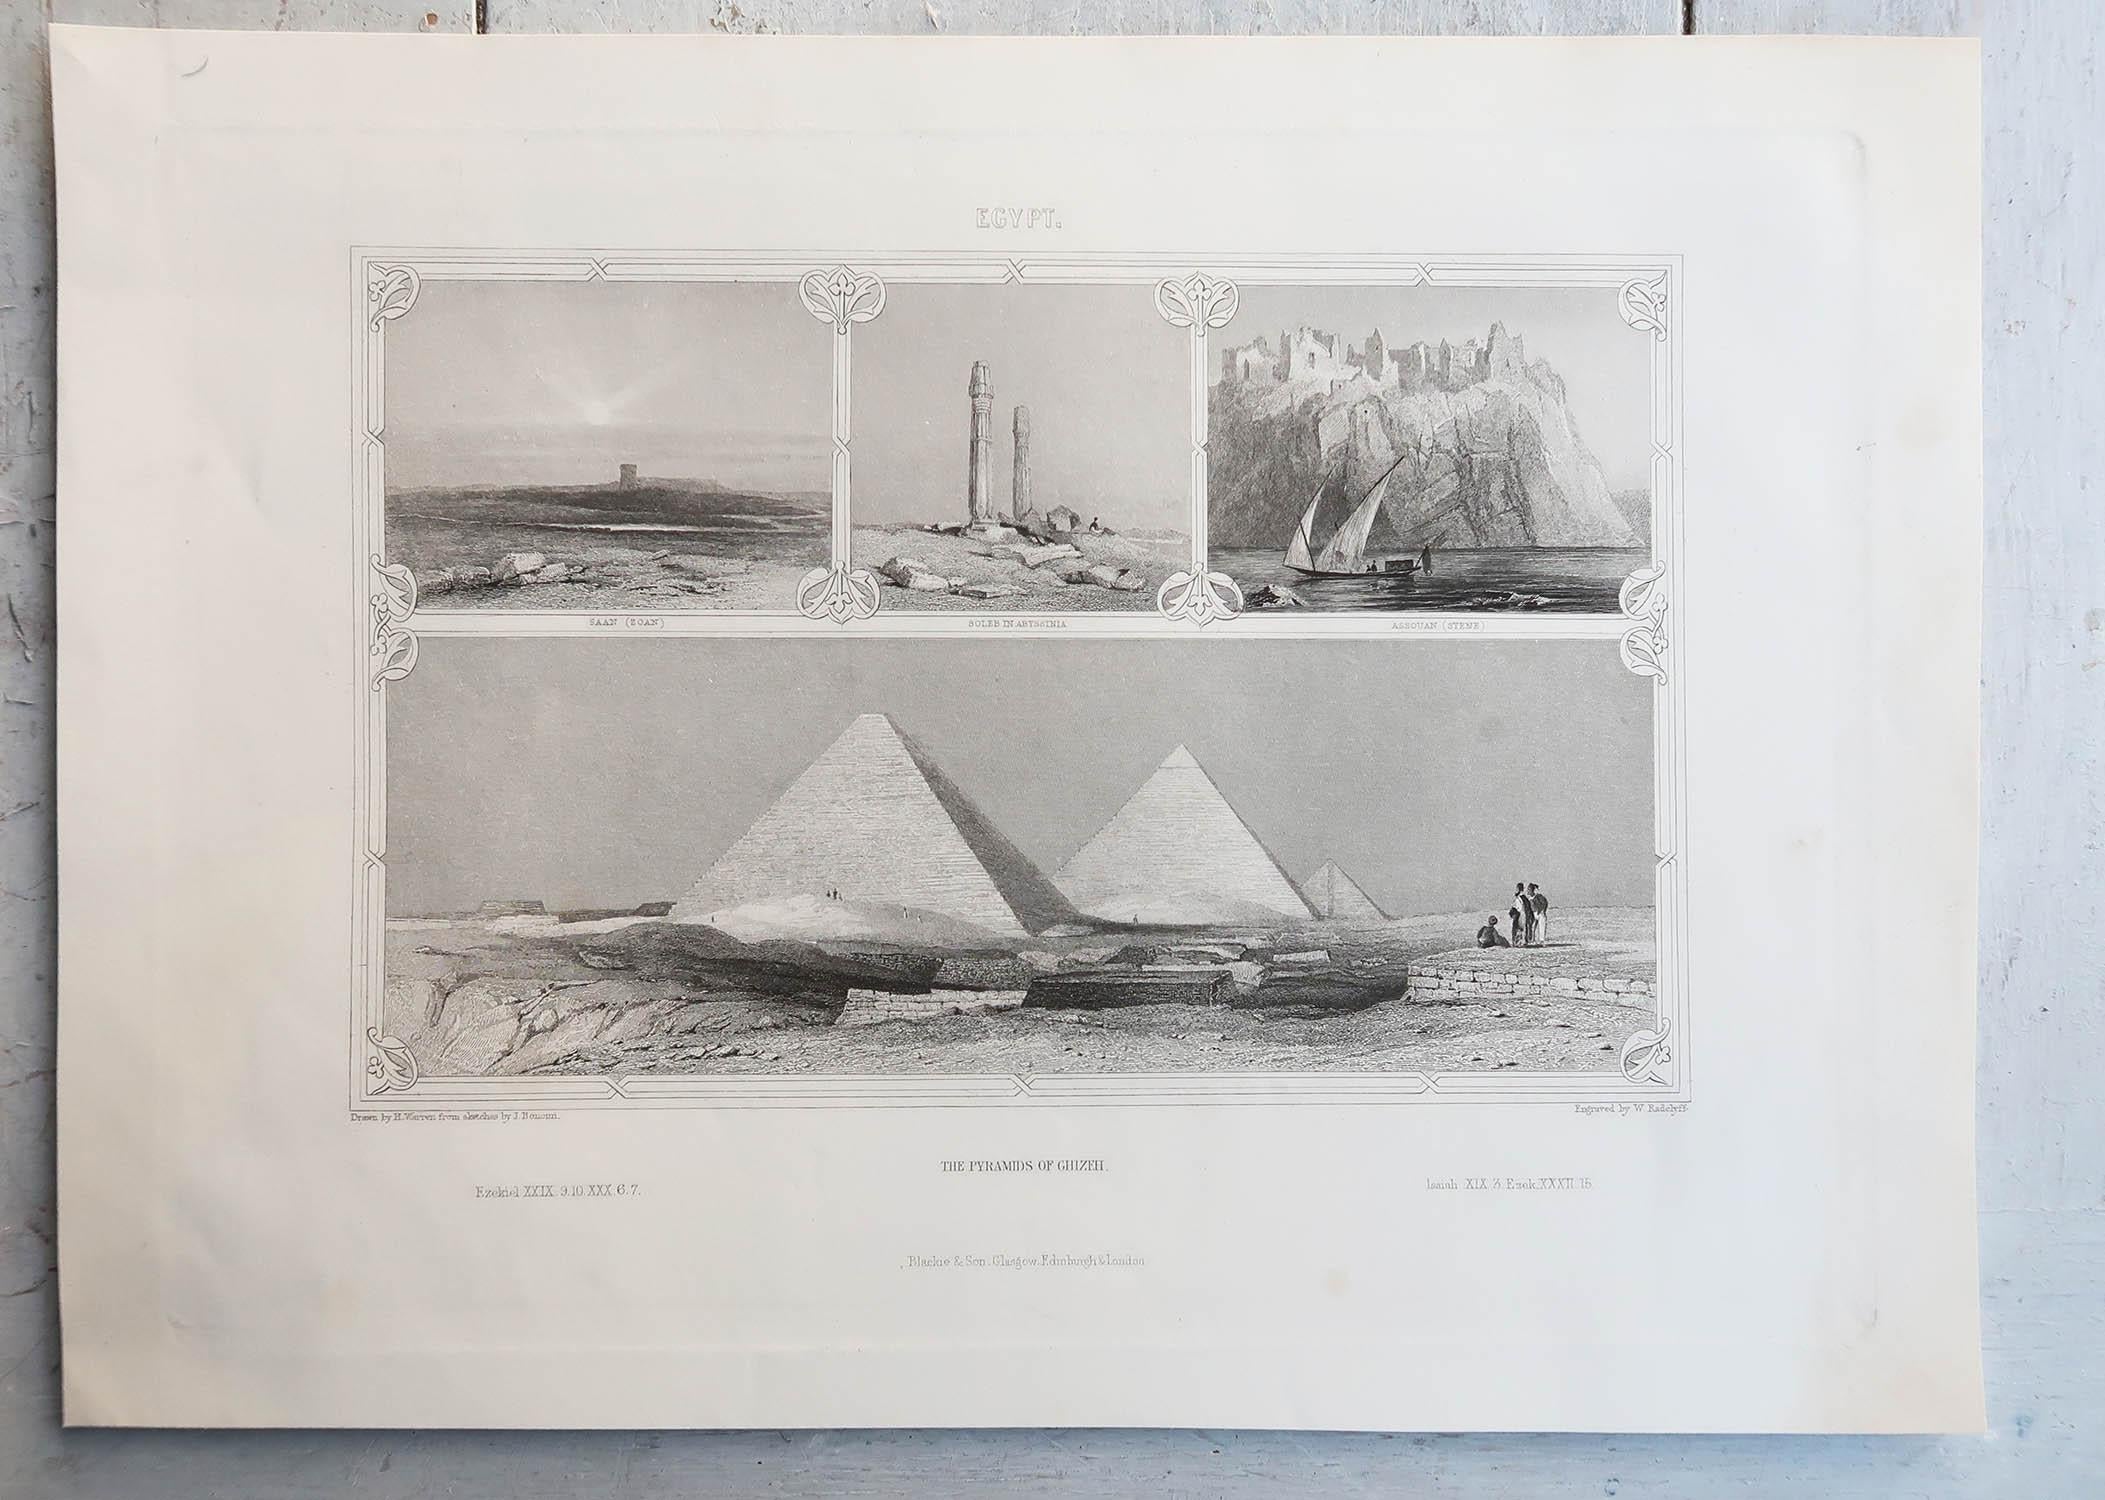 Egyptian Original Antique Print of The Pyramids of Giza, Egypt. C.1850